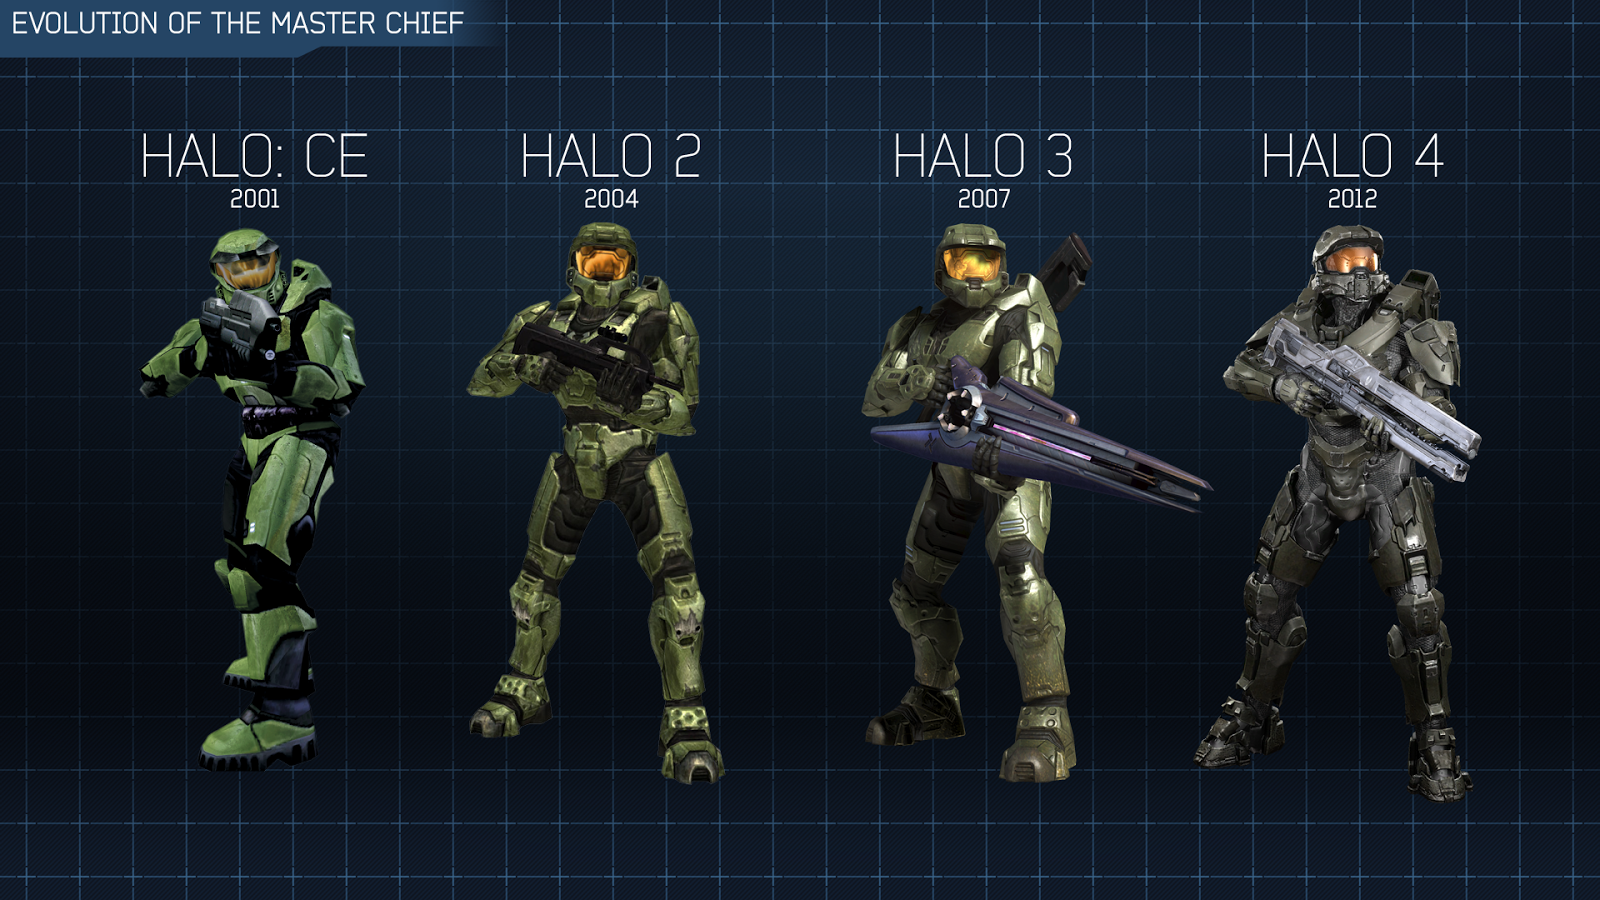 Halo - Master Chief | Gaming and Movies!